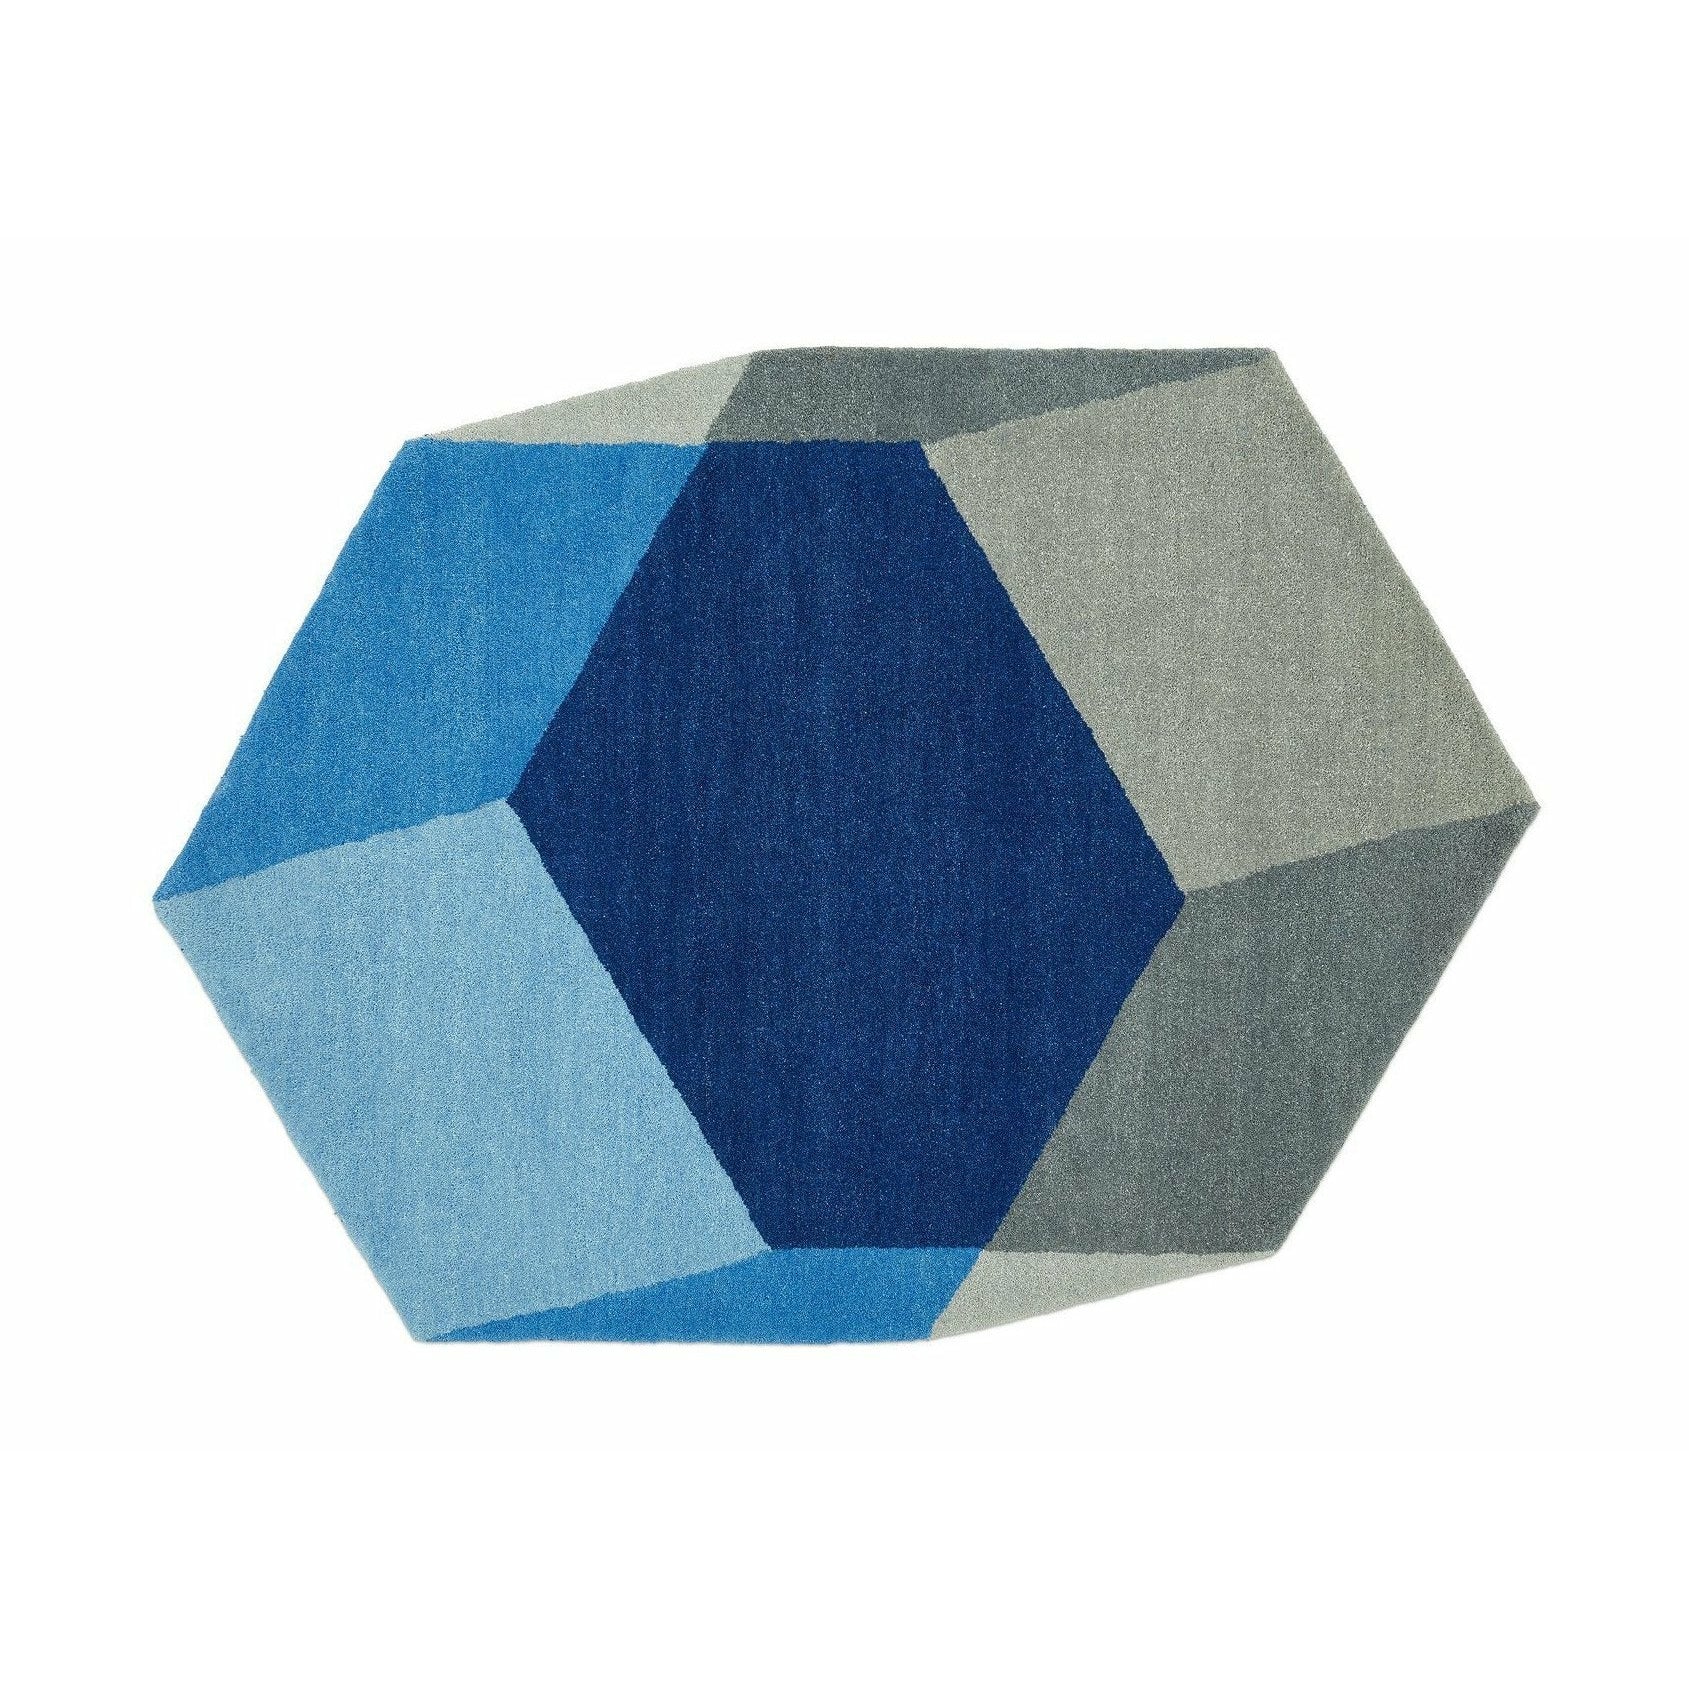 Puik Iso Rug Hexagon, Blue